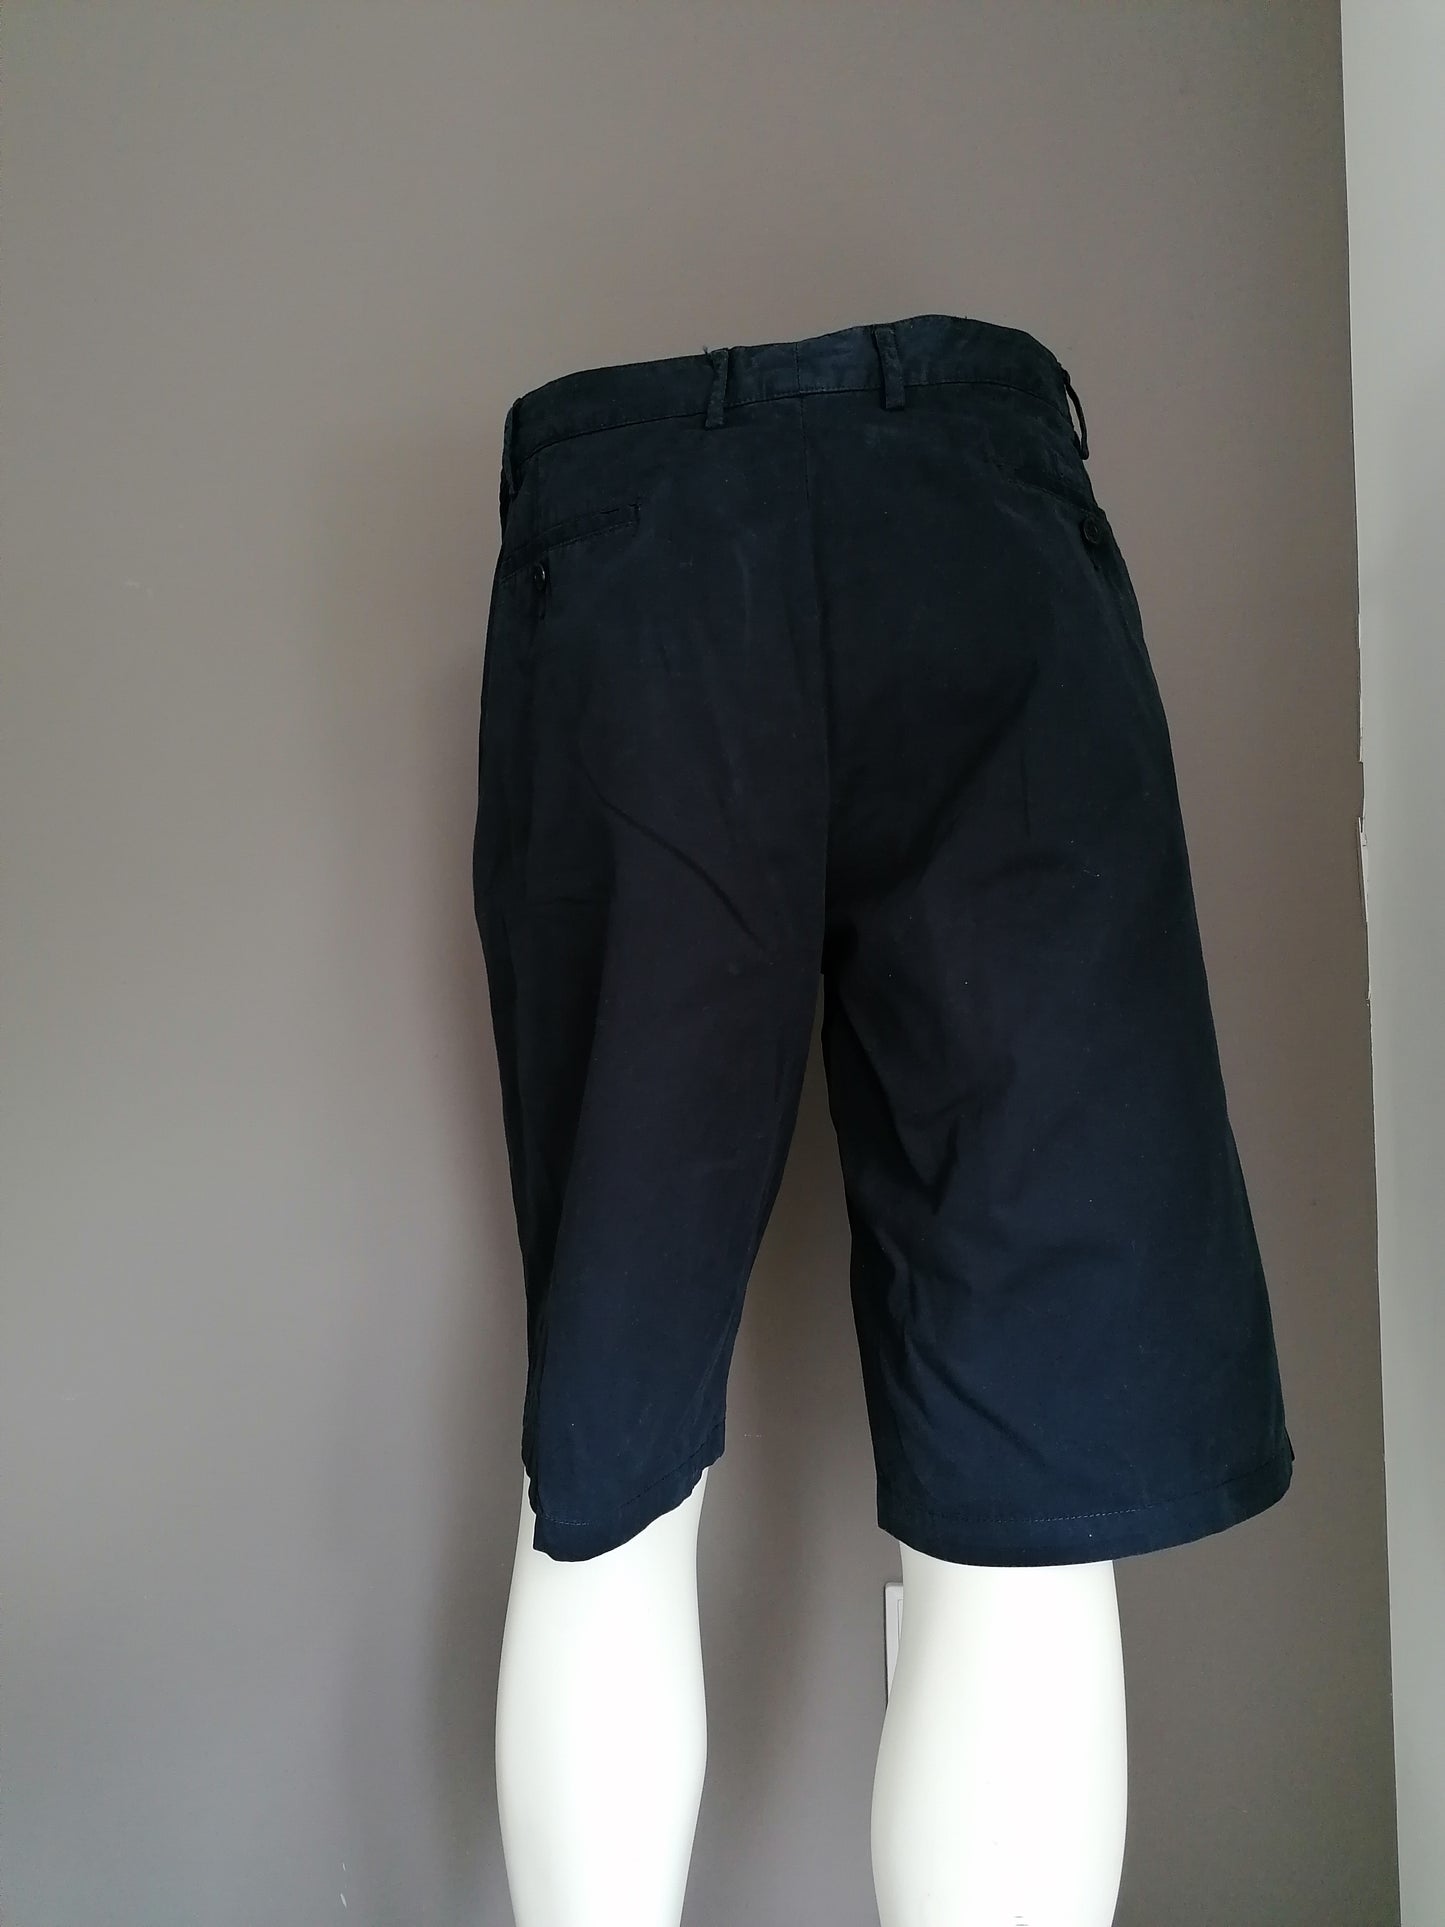 Pantalones cortos de Paul & Tiburón. Color azul oscuro. Tamaño 56